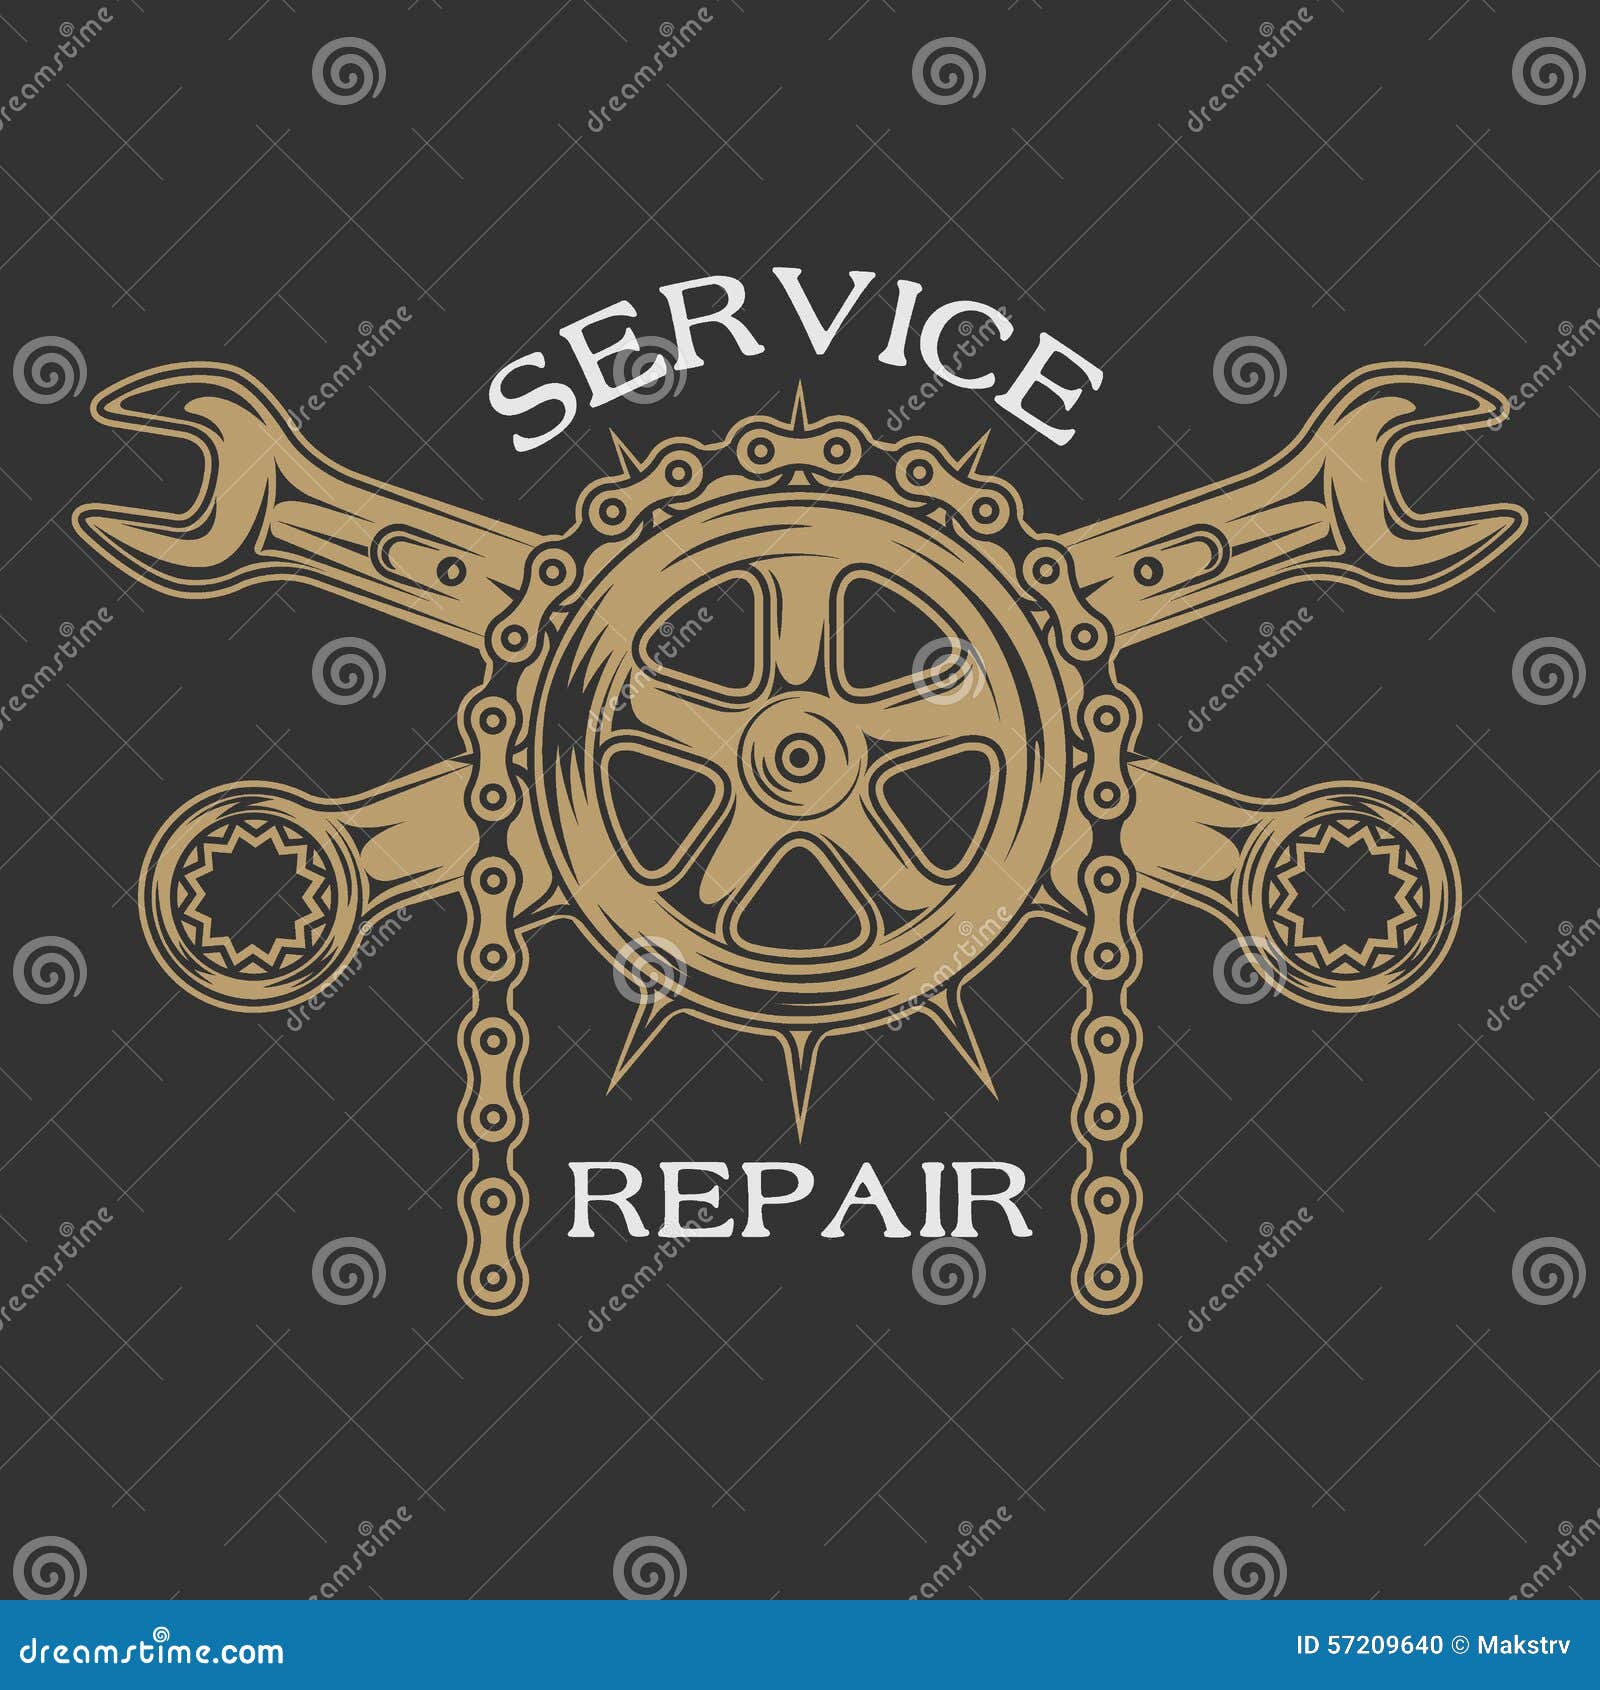 Service Repair And Maintenance Stock Vector - Image: 57209640